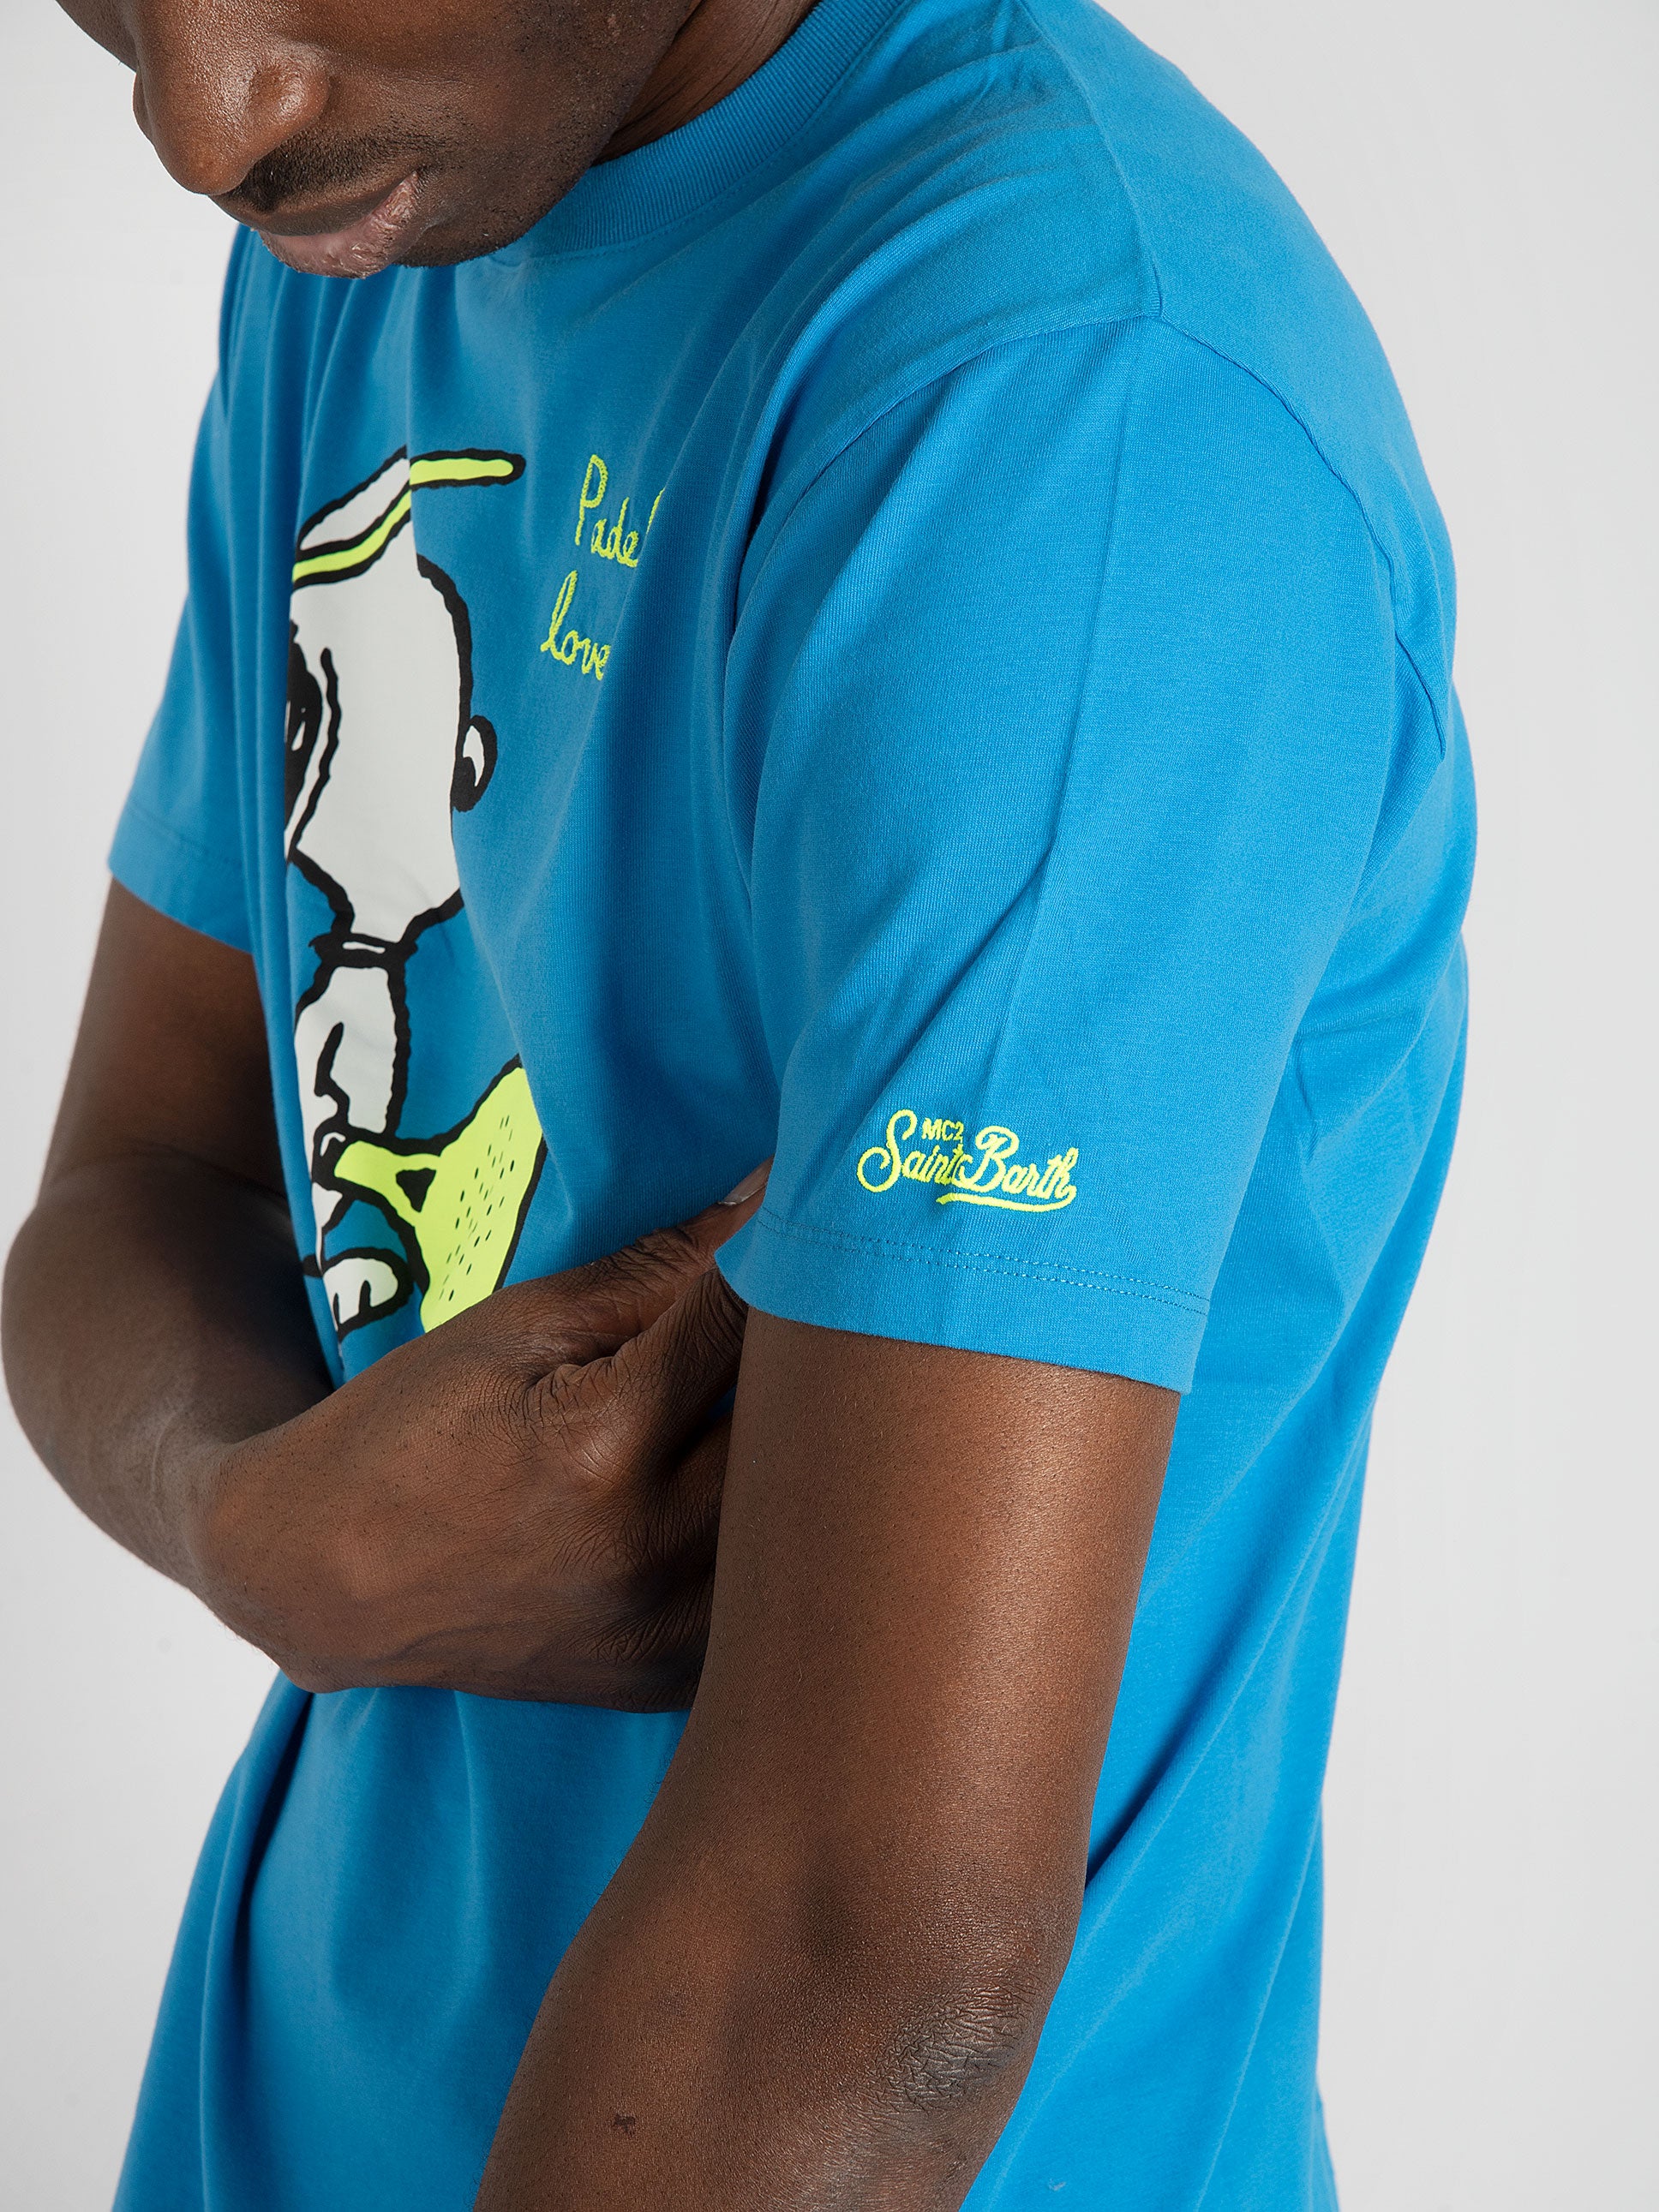 T-shirt Snoopy Padel Lover  - Azzurro